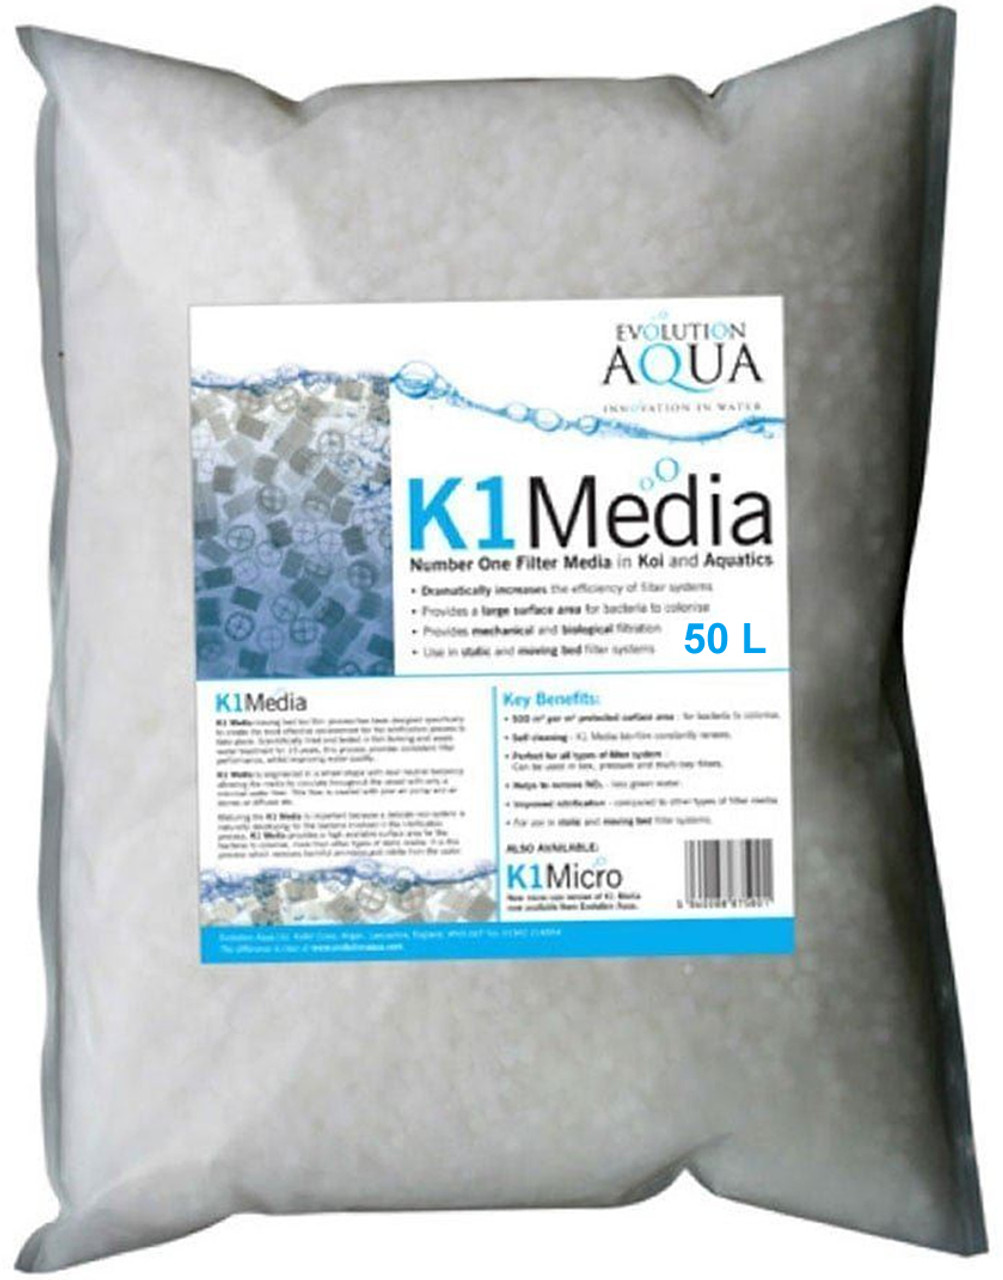 Evolution Aqua K1 Filter Media 50 Litre